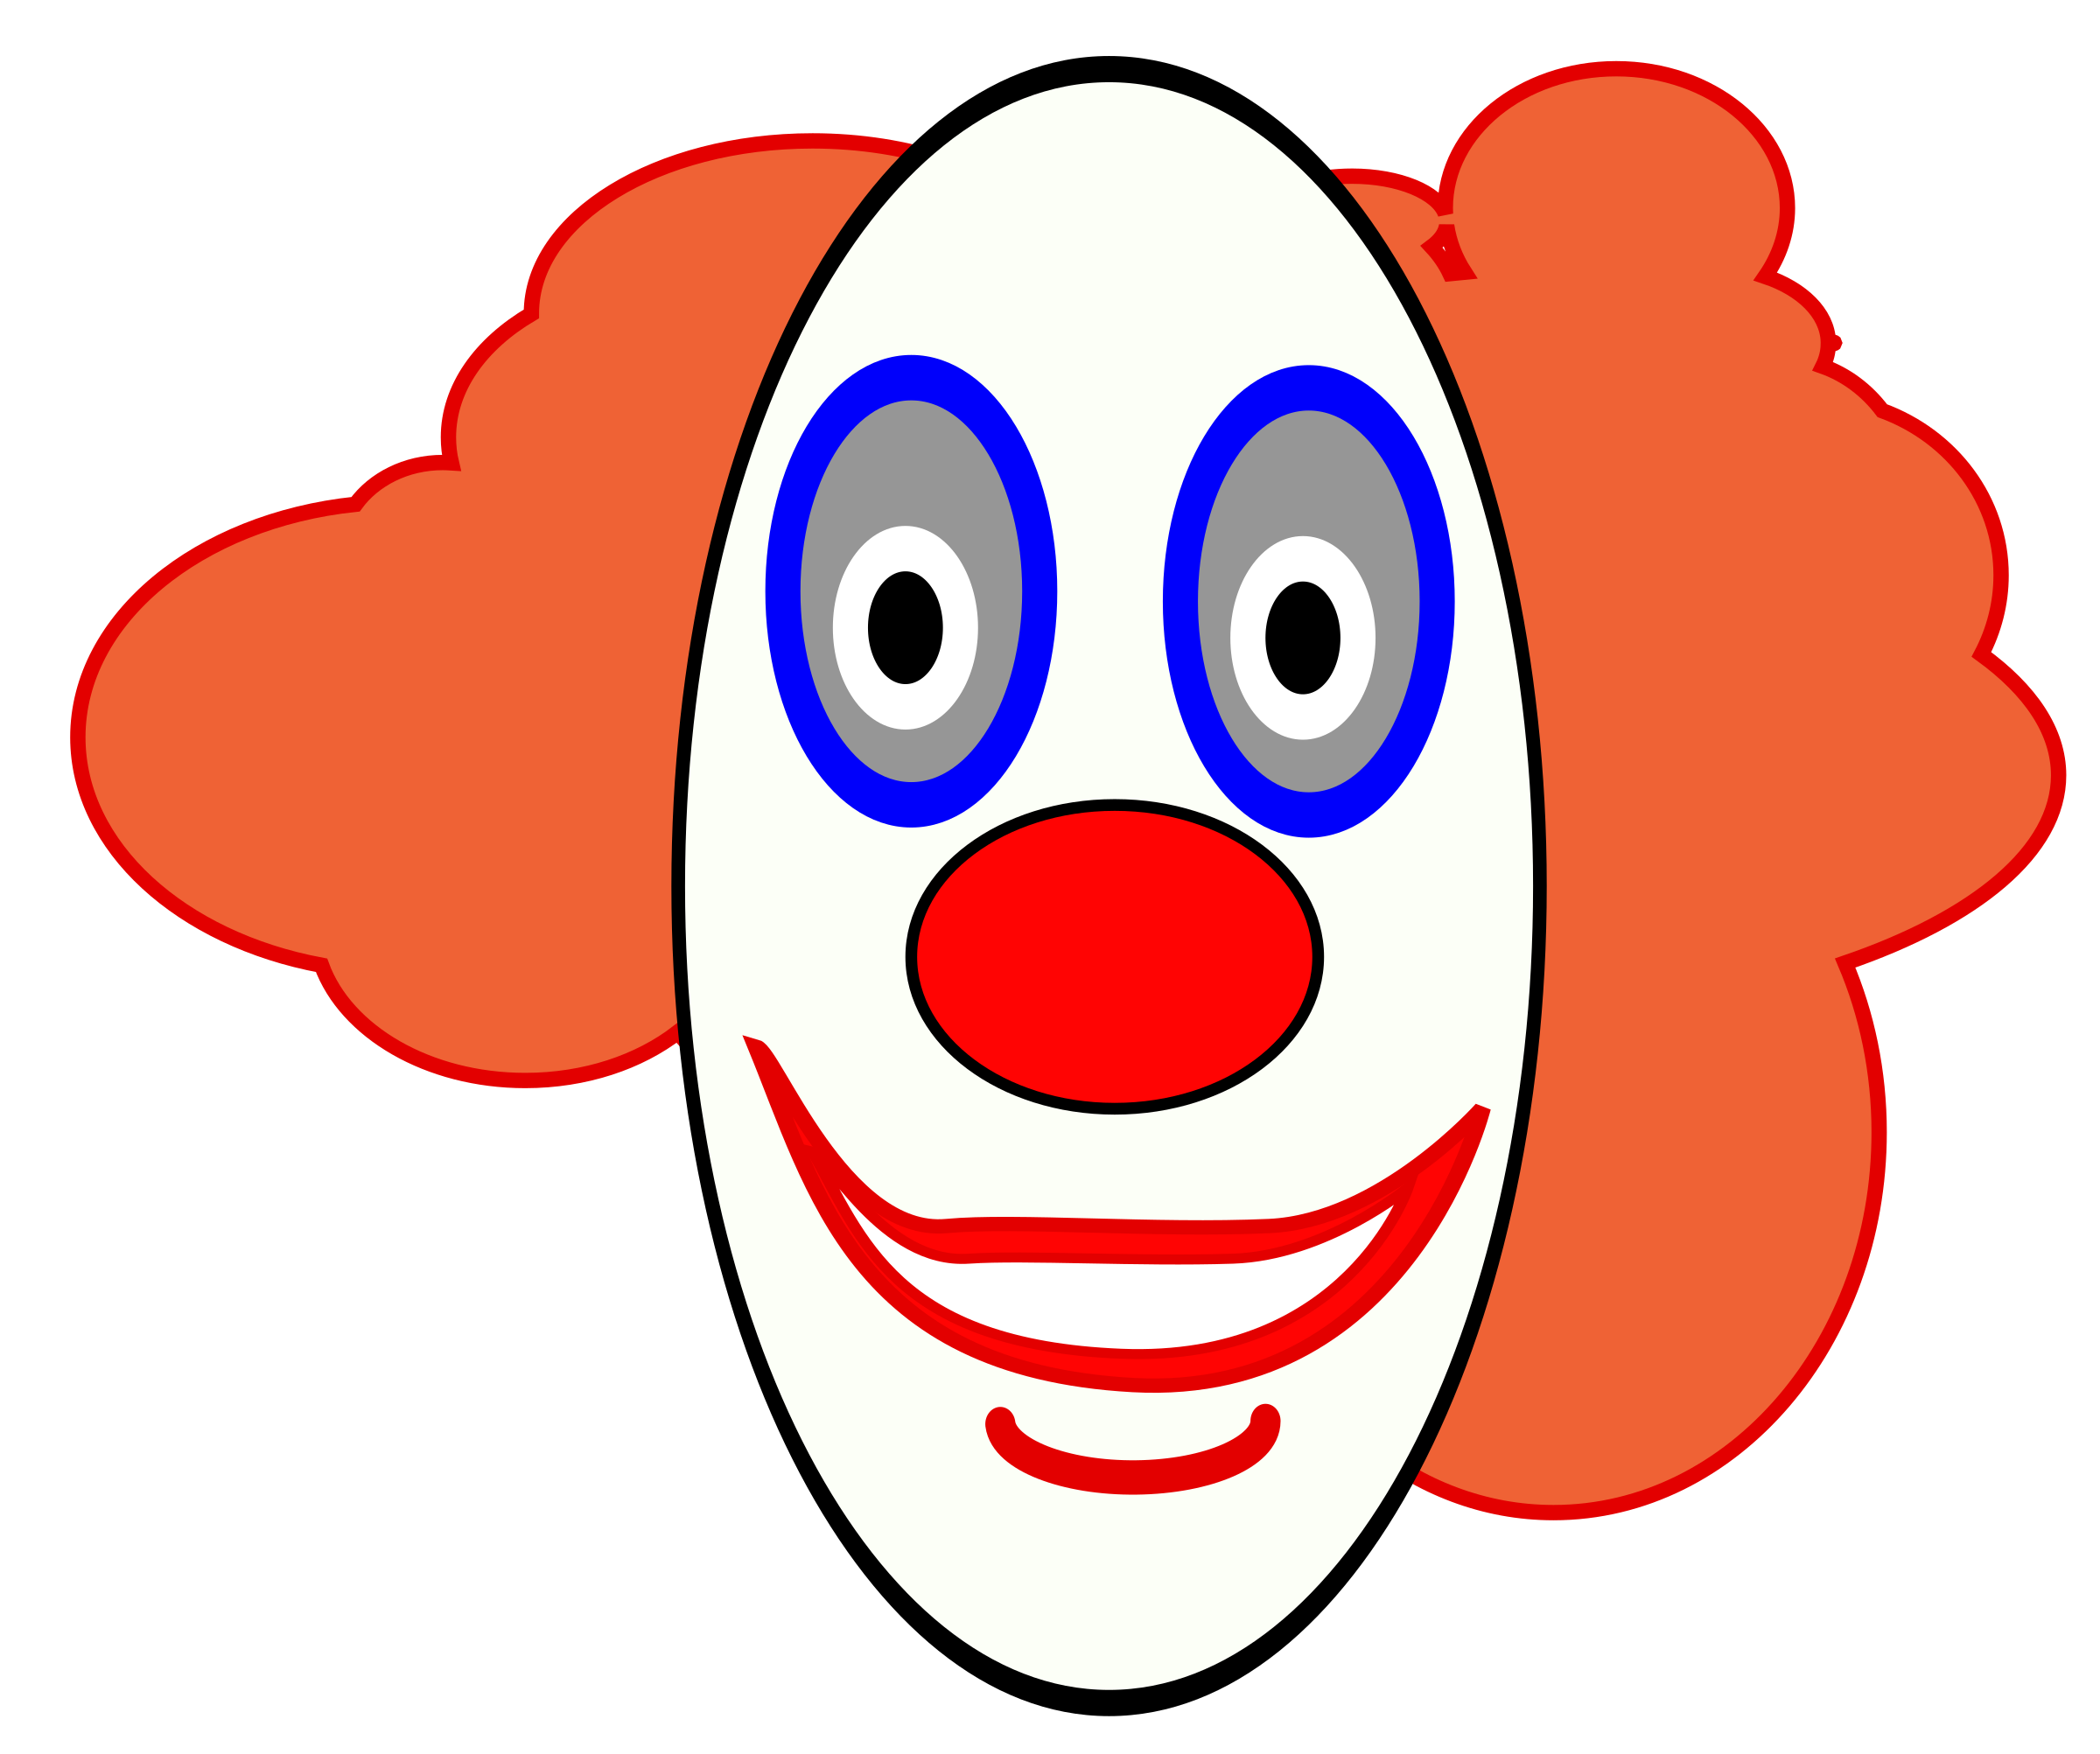 Circus Joker Face Png - Big Image (Png), Transparent background PNG HD thumbnail